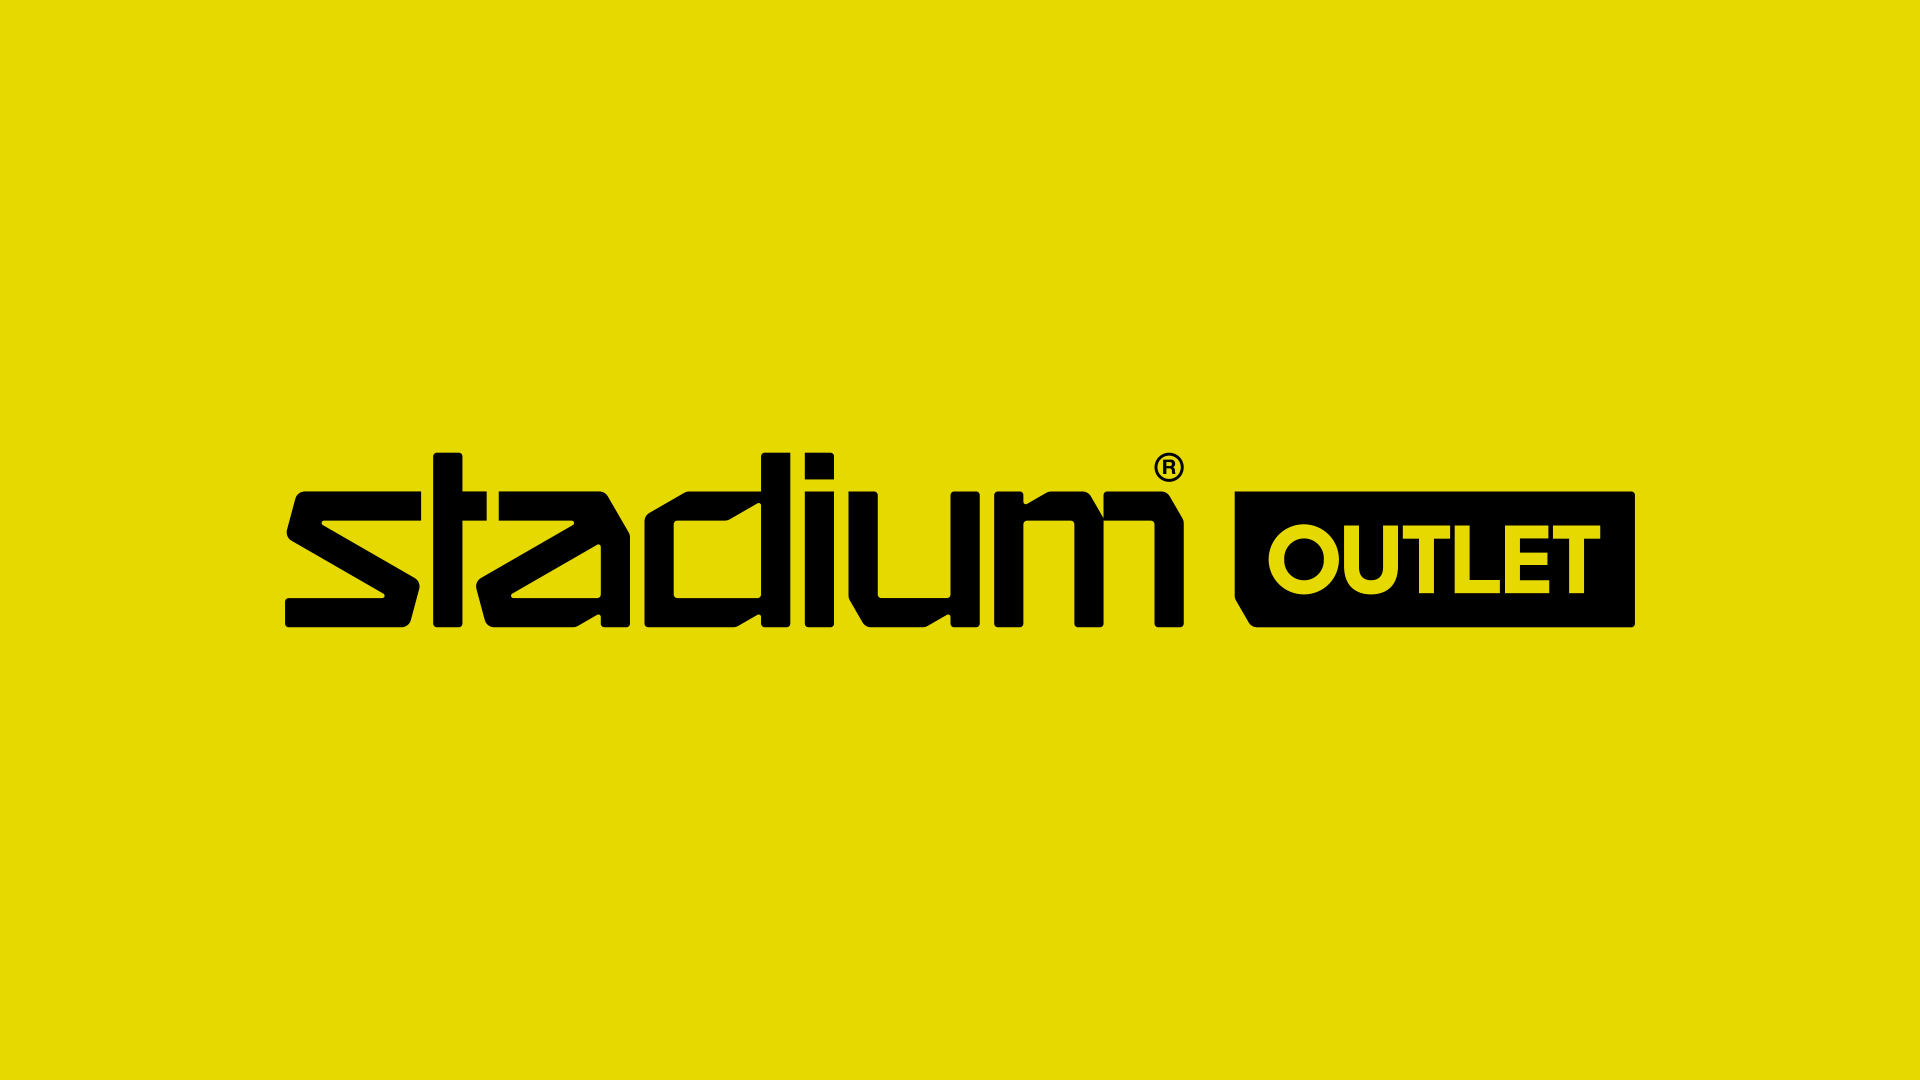 Stadium Outlet Online